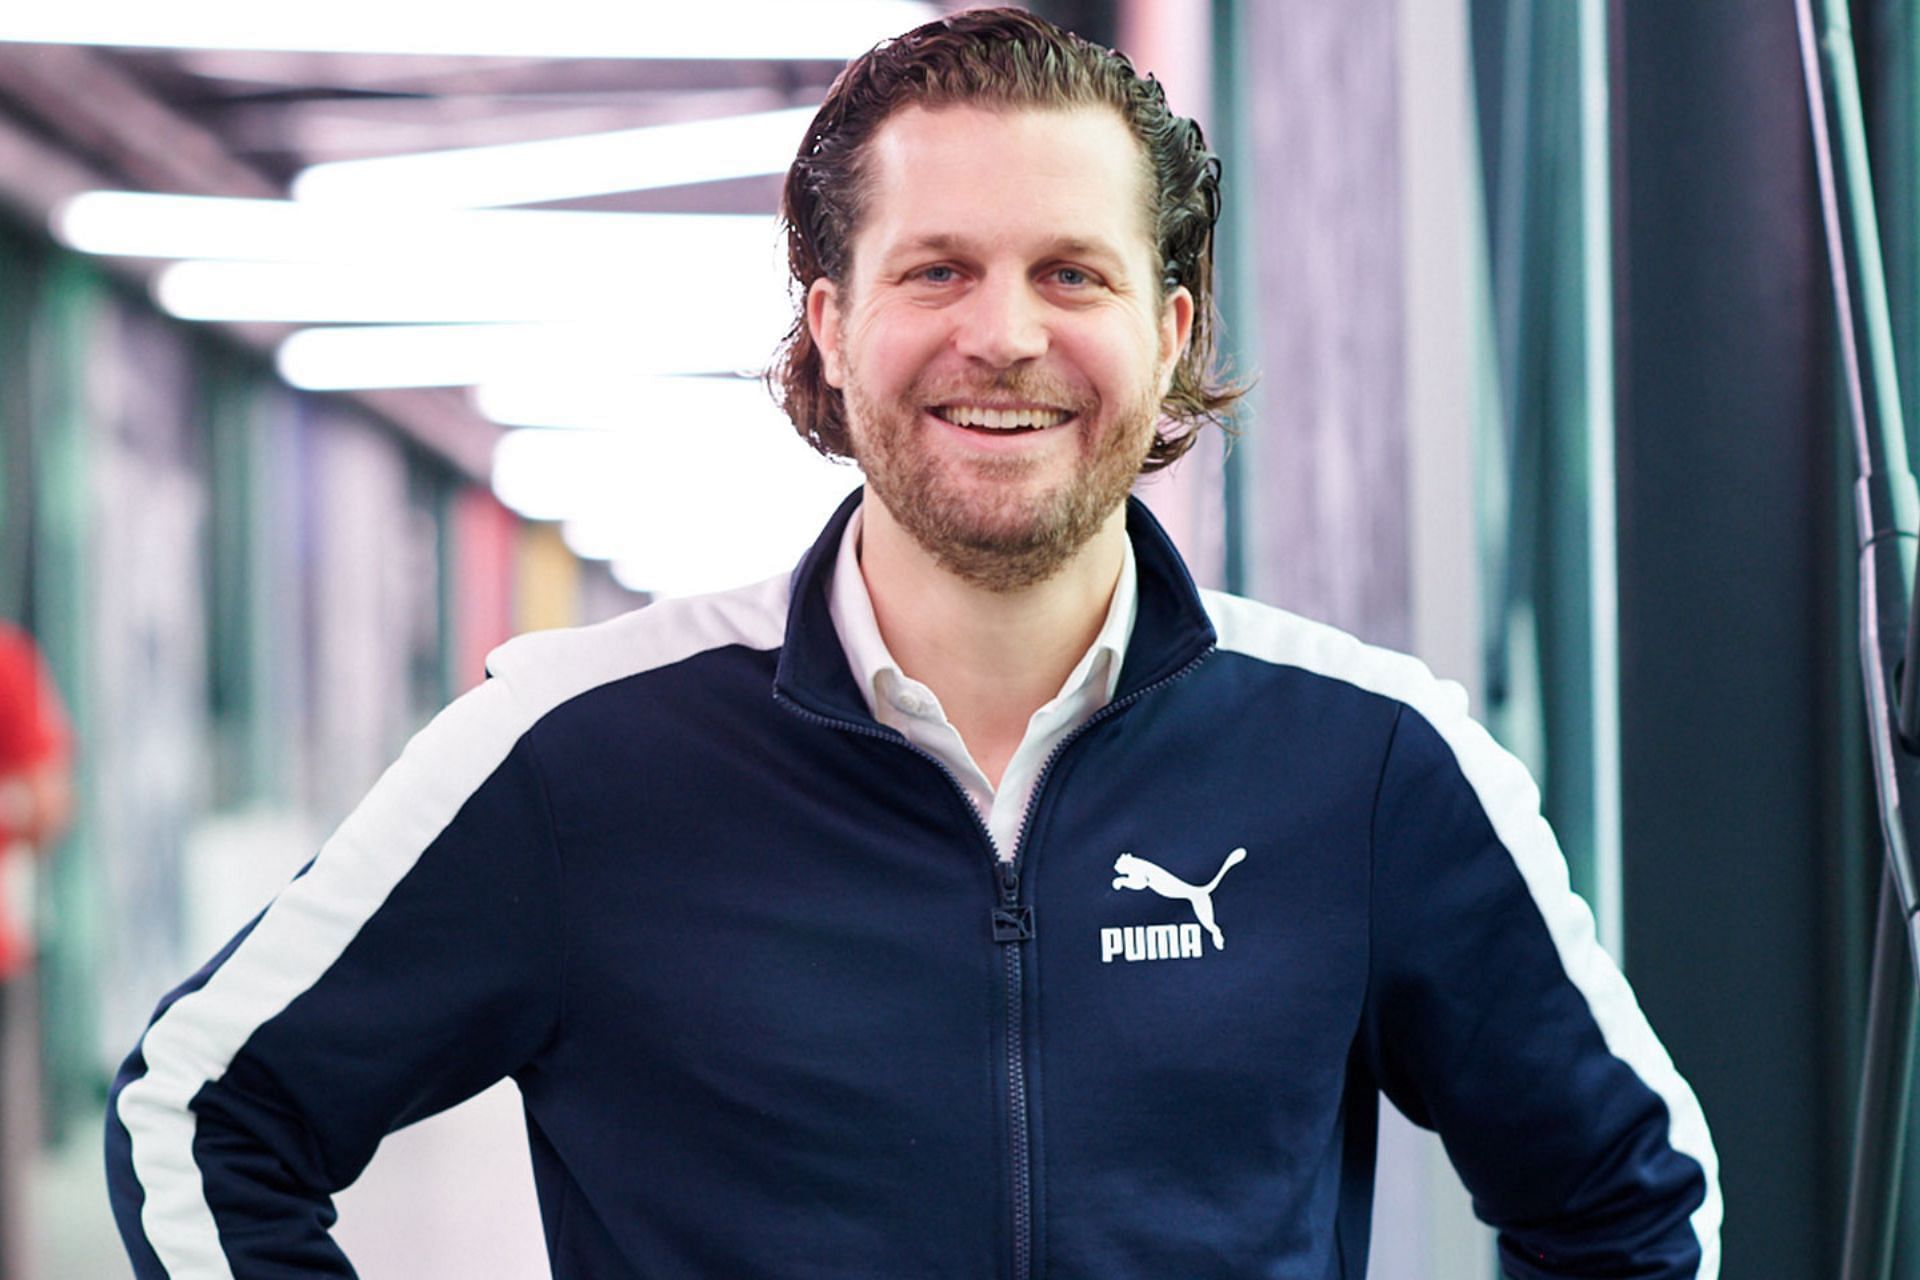 Arne Freundt - All about Puma&rsquo;s new CEO (Image via Puma)